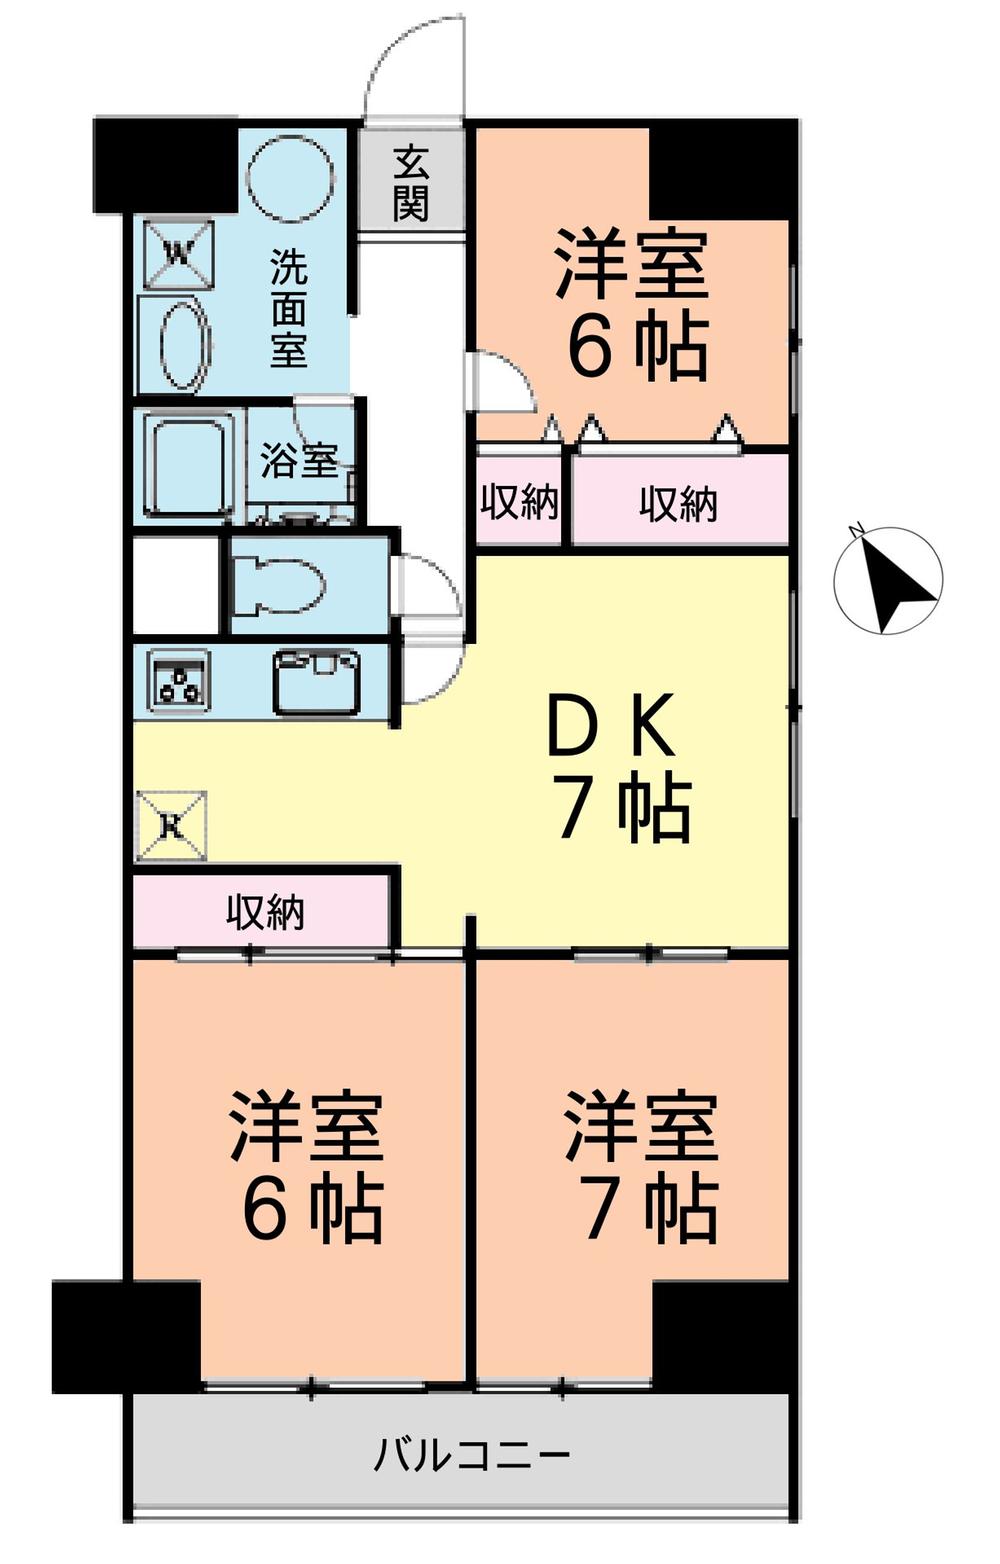 Floor plan. 3DK, Price 16,900,000 yen, Footprint 70.4 sq m , Balcony area 7.65 sq m